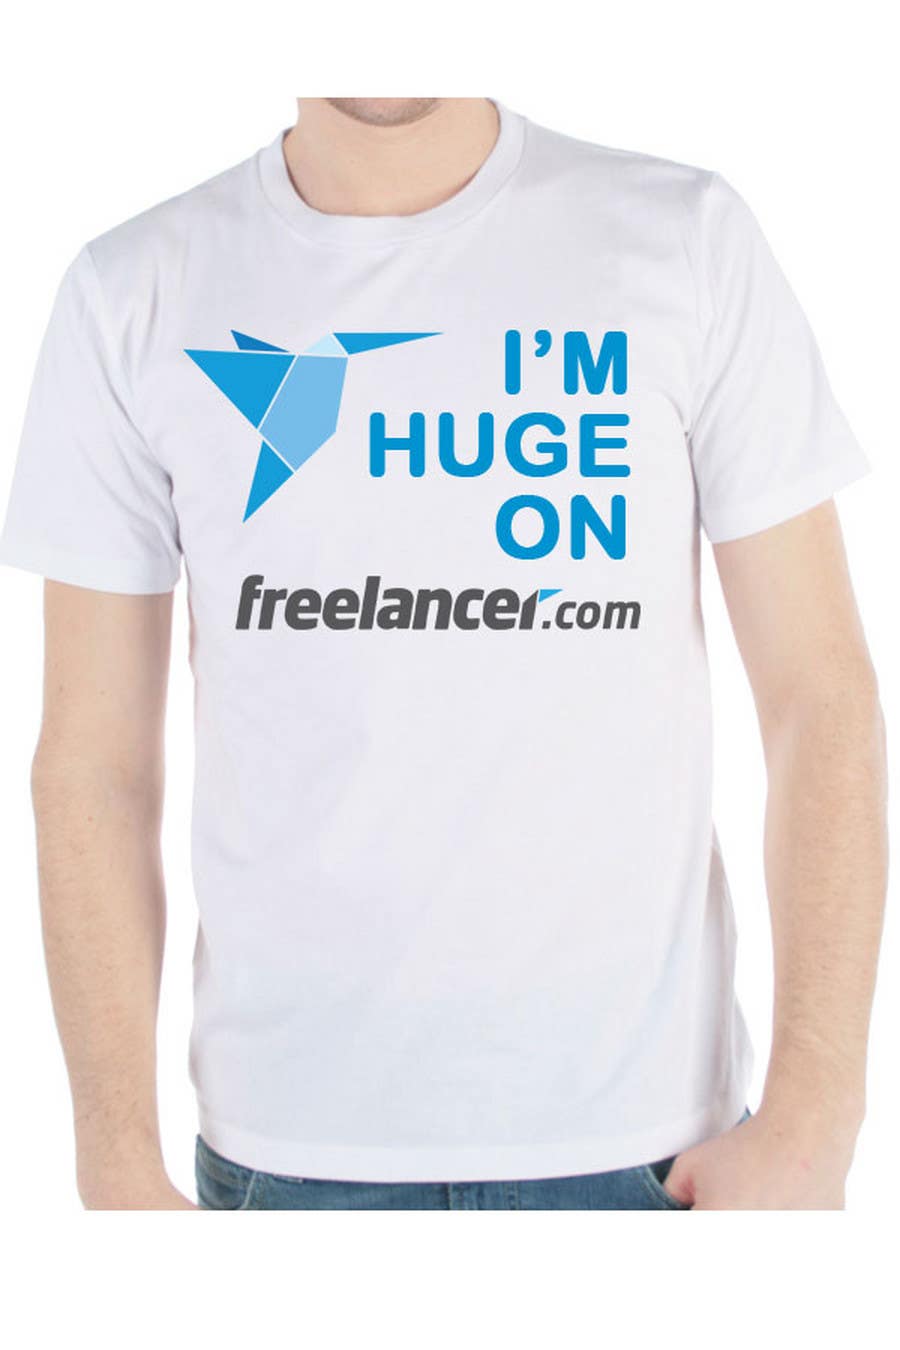 Wasilisho la Shindano #3707 la                                                 T-shirt Design Contest for Freelancer.com
                                            